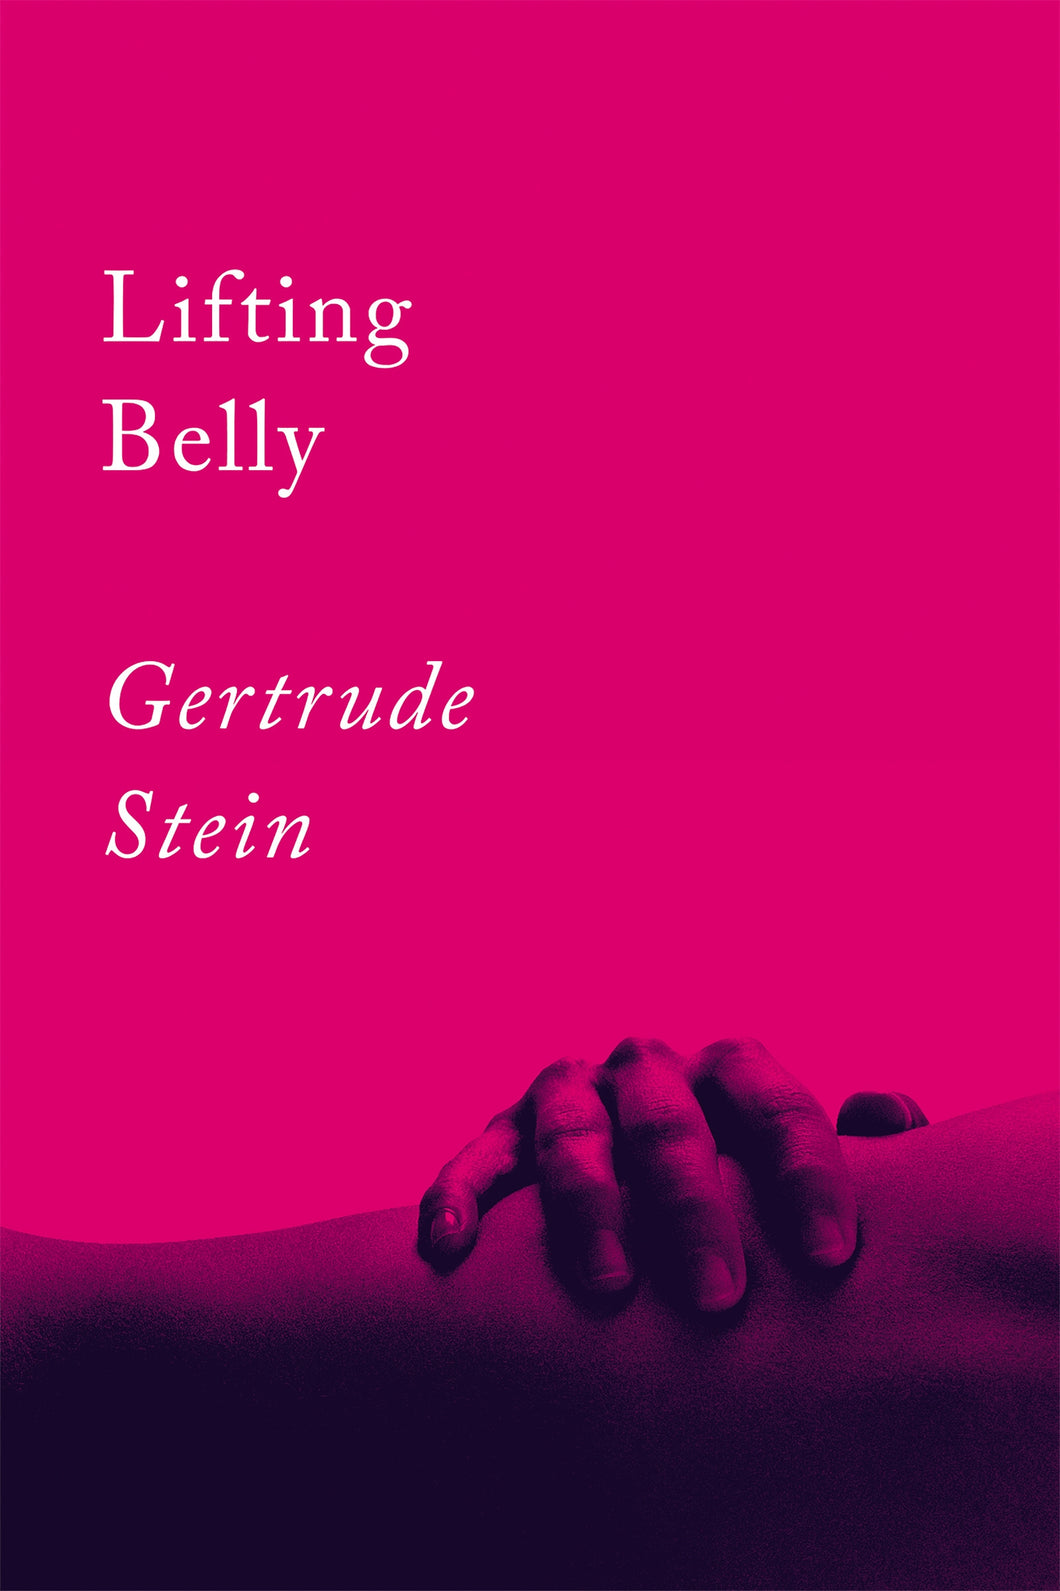 Lifting Belly : An Erotic Poem ร้านหนังสือและสิ่งของ เป็นร้านหนังสือภาษาอังกฤษหายาก และร้านกาแฟ หรือ บุ๊คคาเฟ่ ตั้งอยู่สุขุมวิท กรุงเทพ